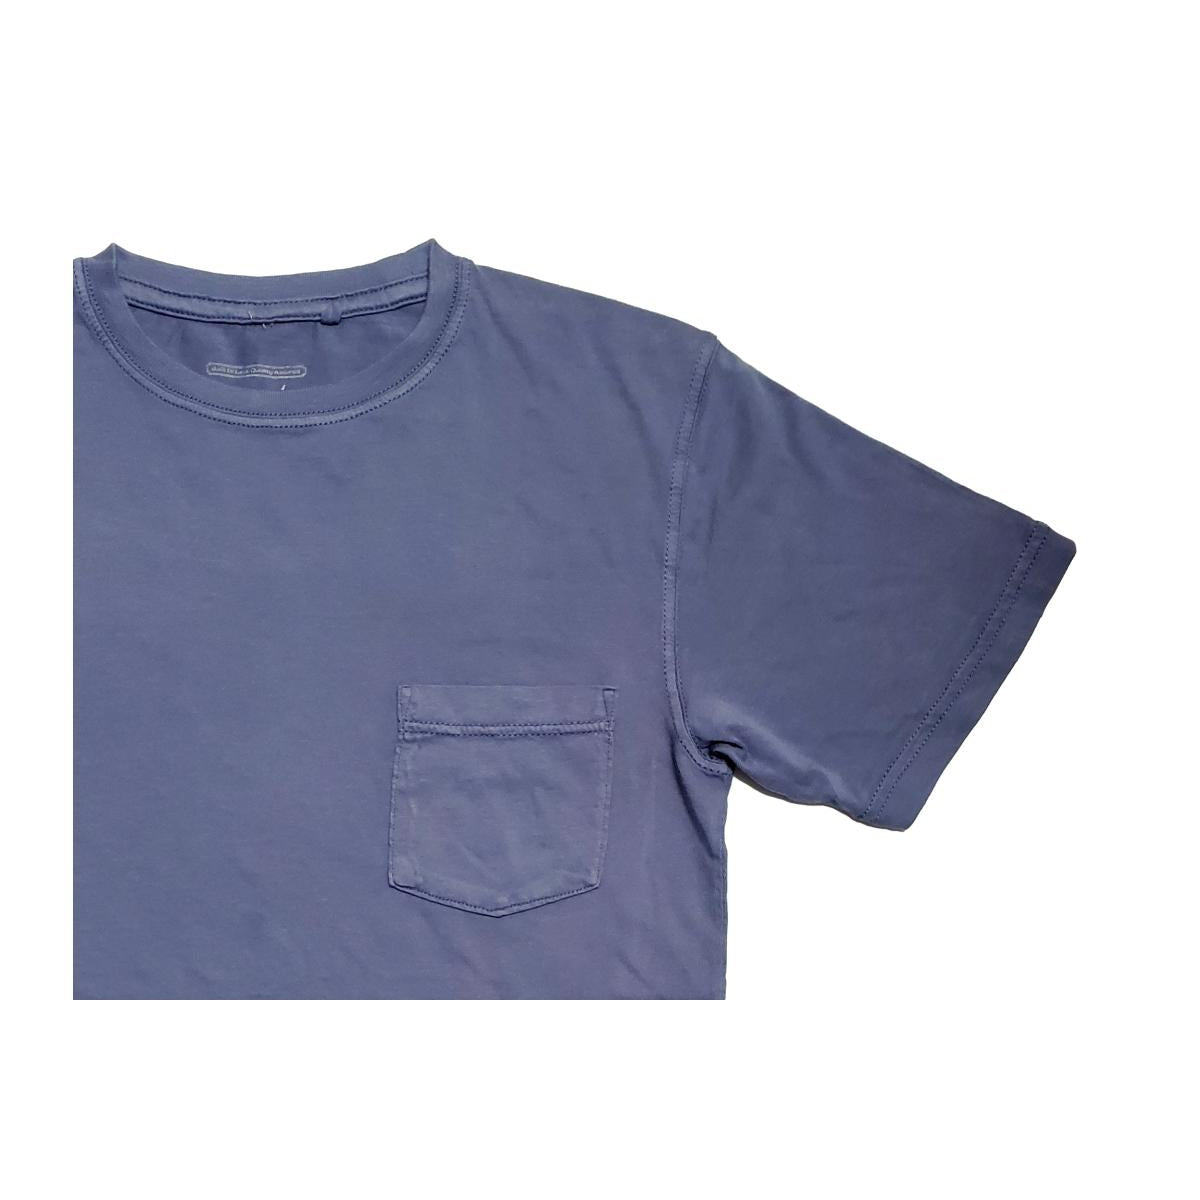 Garment Dyed Pocket Tee Blue Horizon-Milworks-MILWORKS